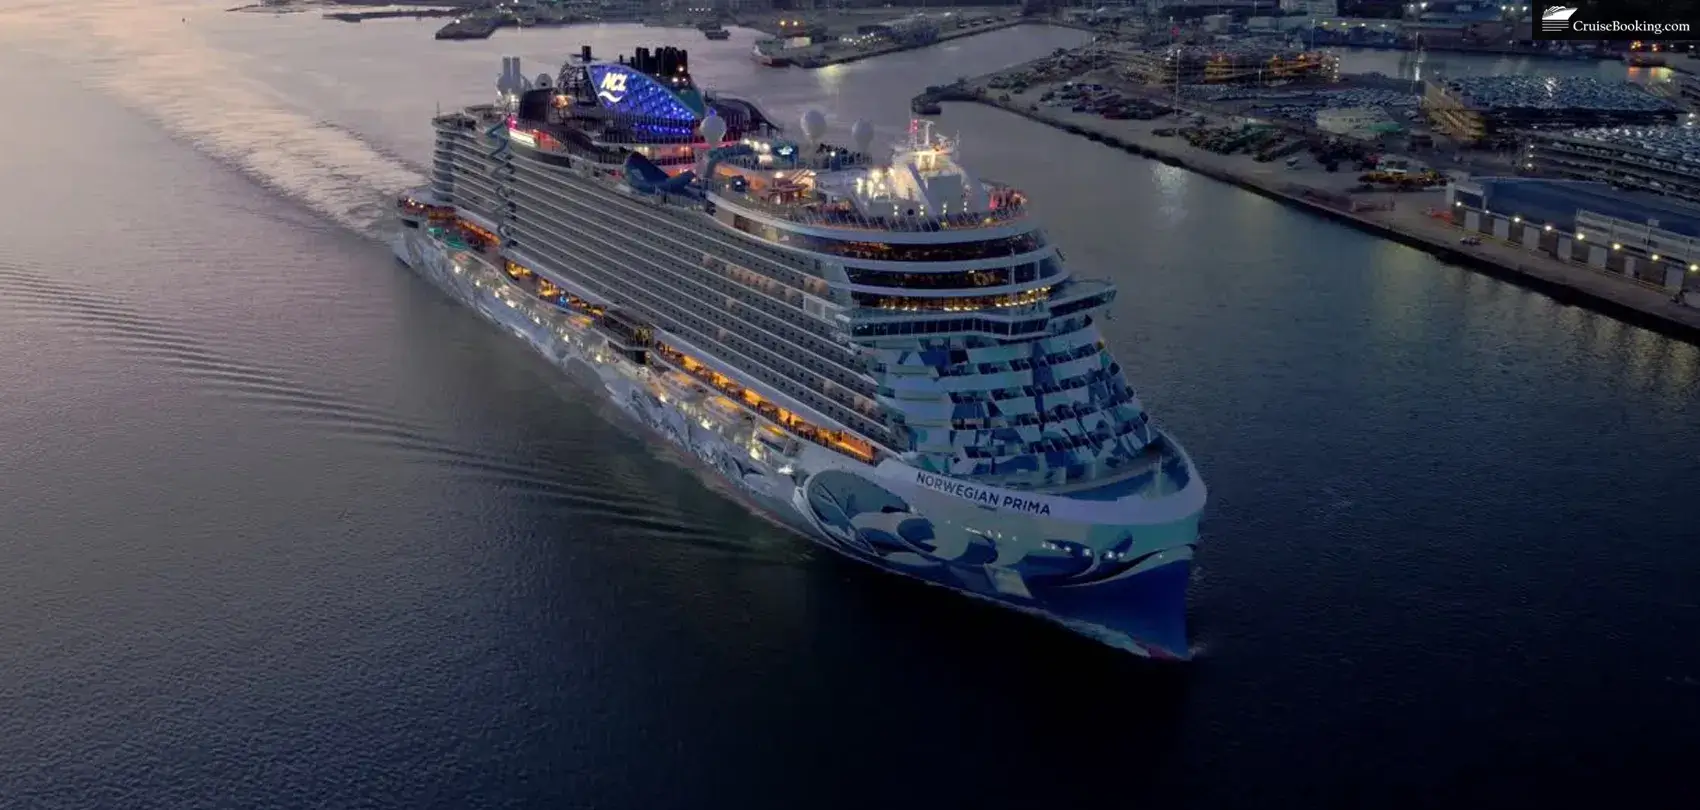 Norwegian Prima cruise ship leaves Southampton